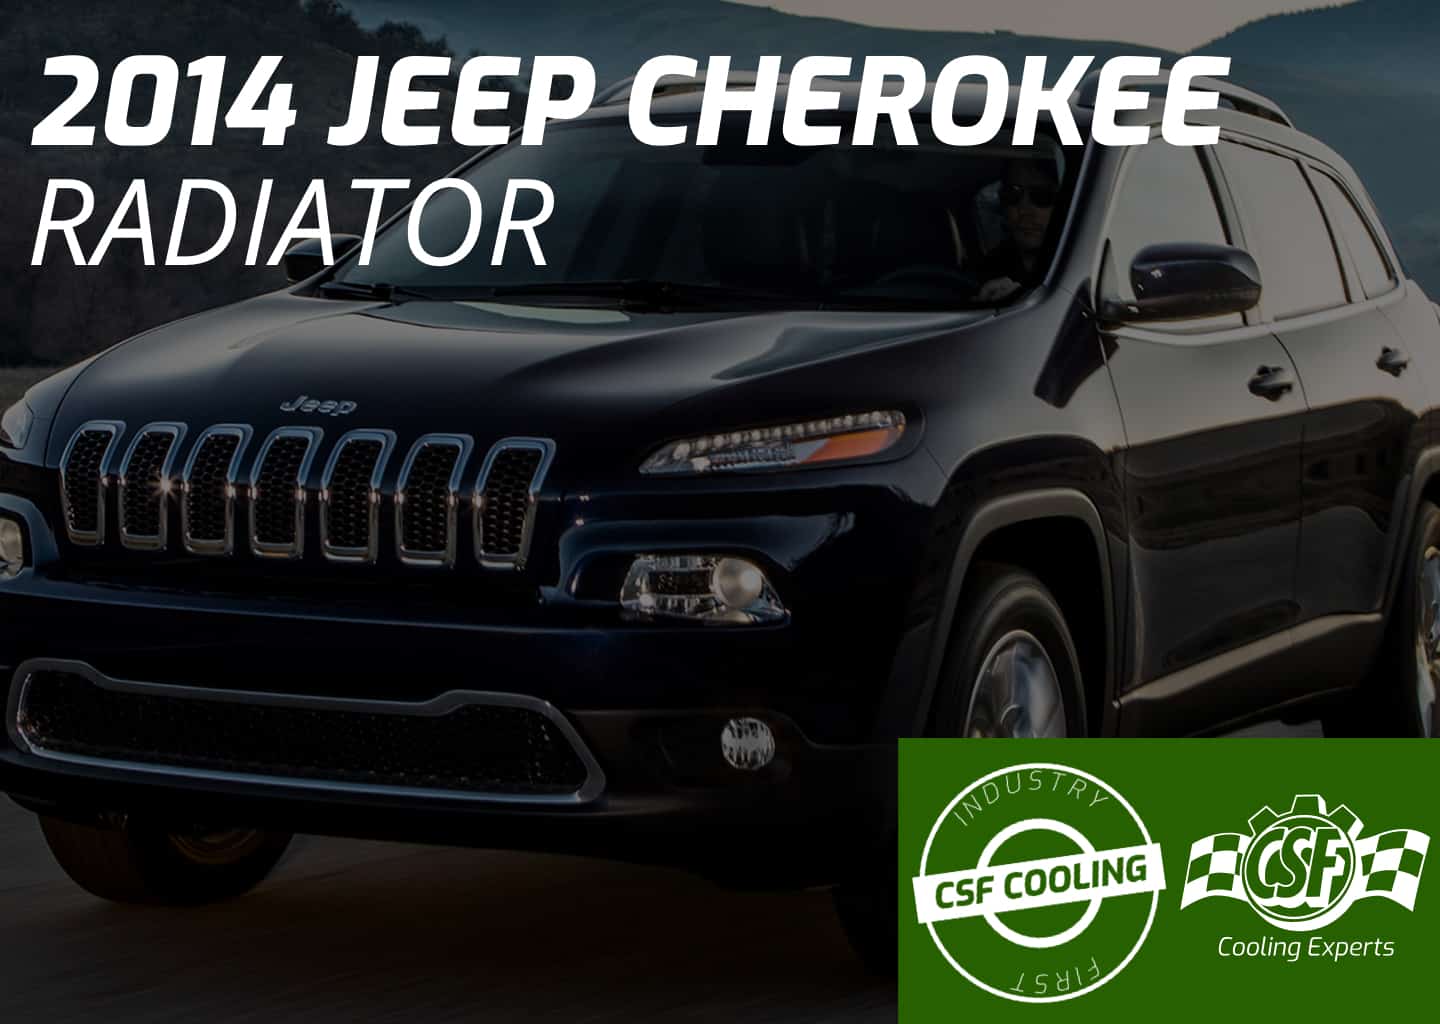 2014 Jeep Cherokee Radiator